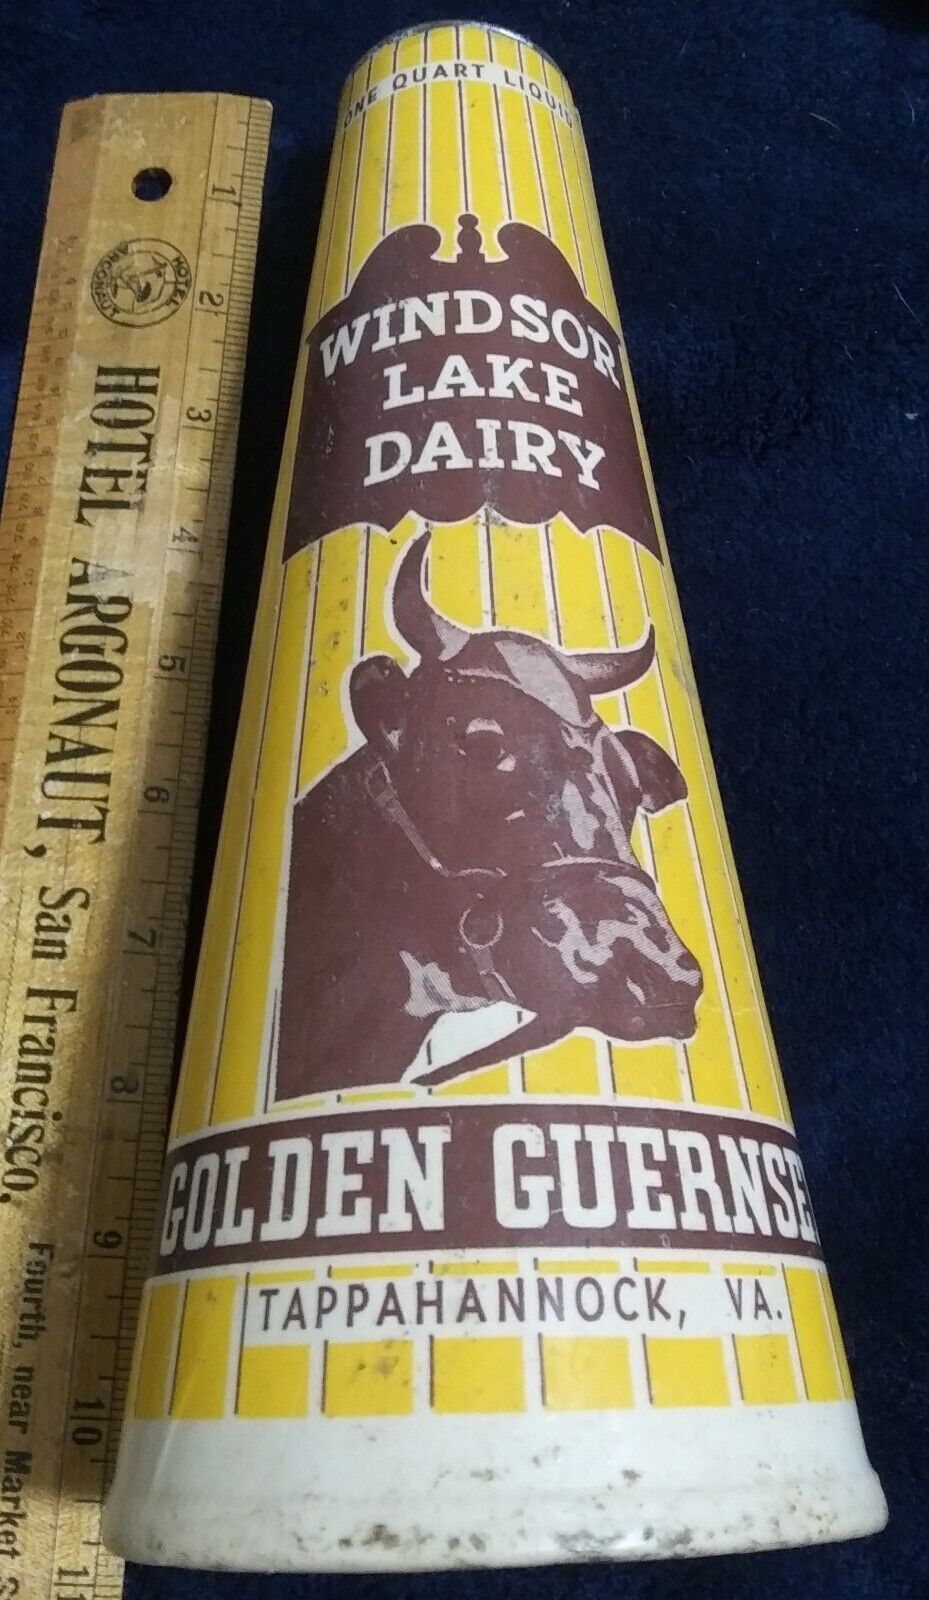 QUART Windsor Lake Dairy Golden Guernsey Milk Bottle Wax Kone Carton Virginia